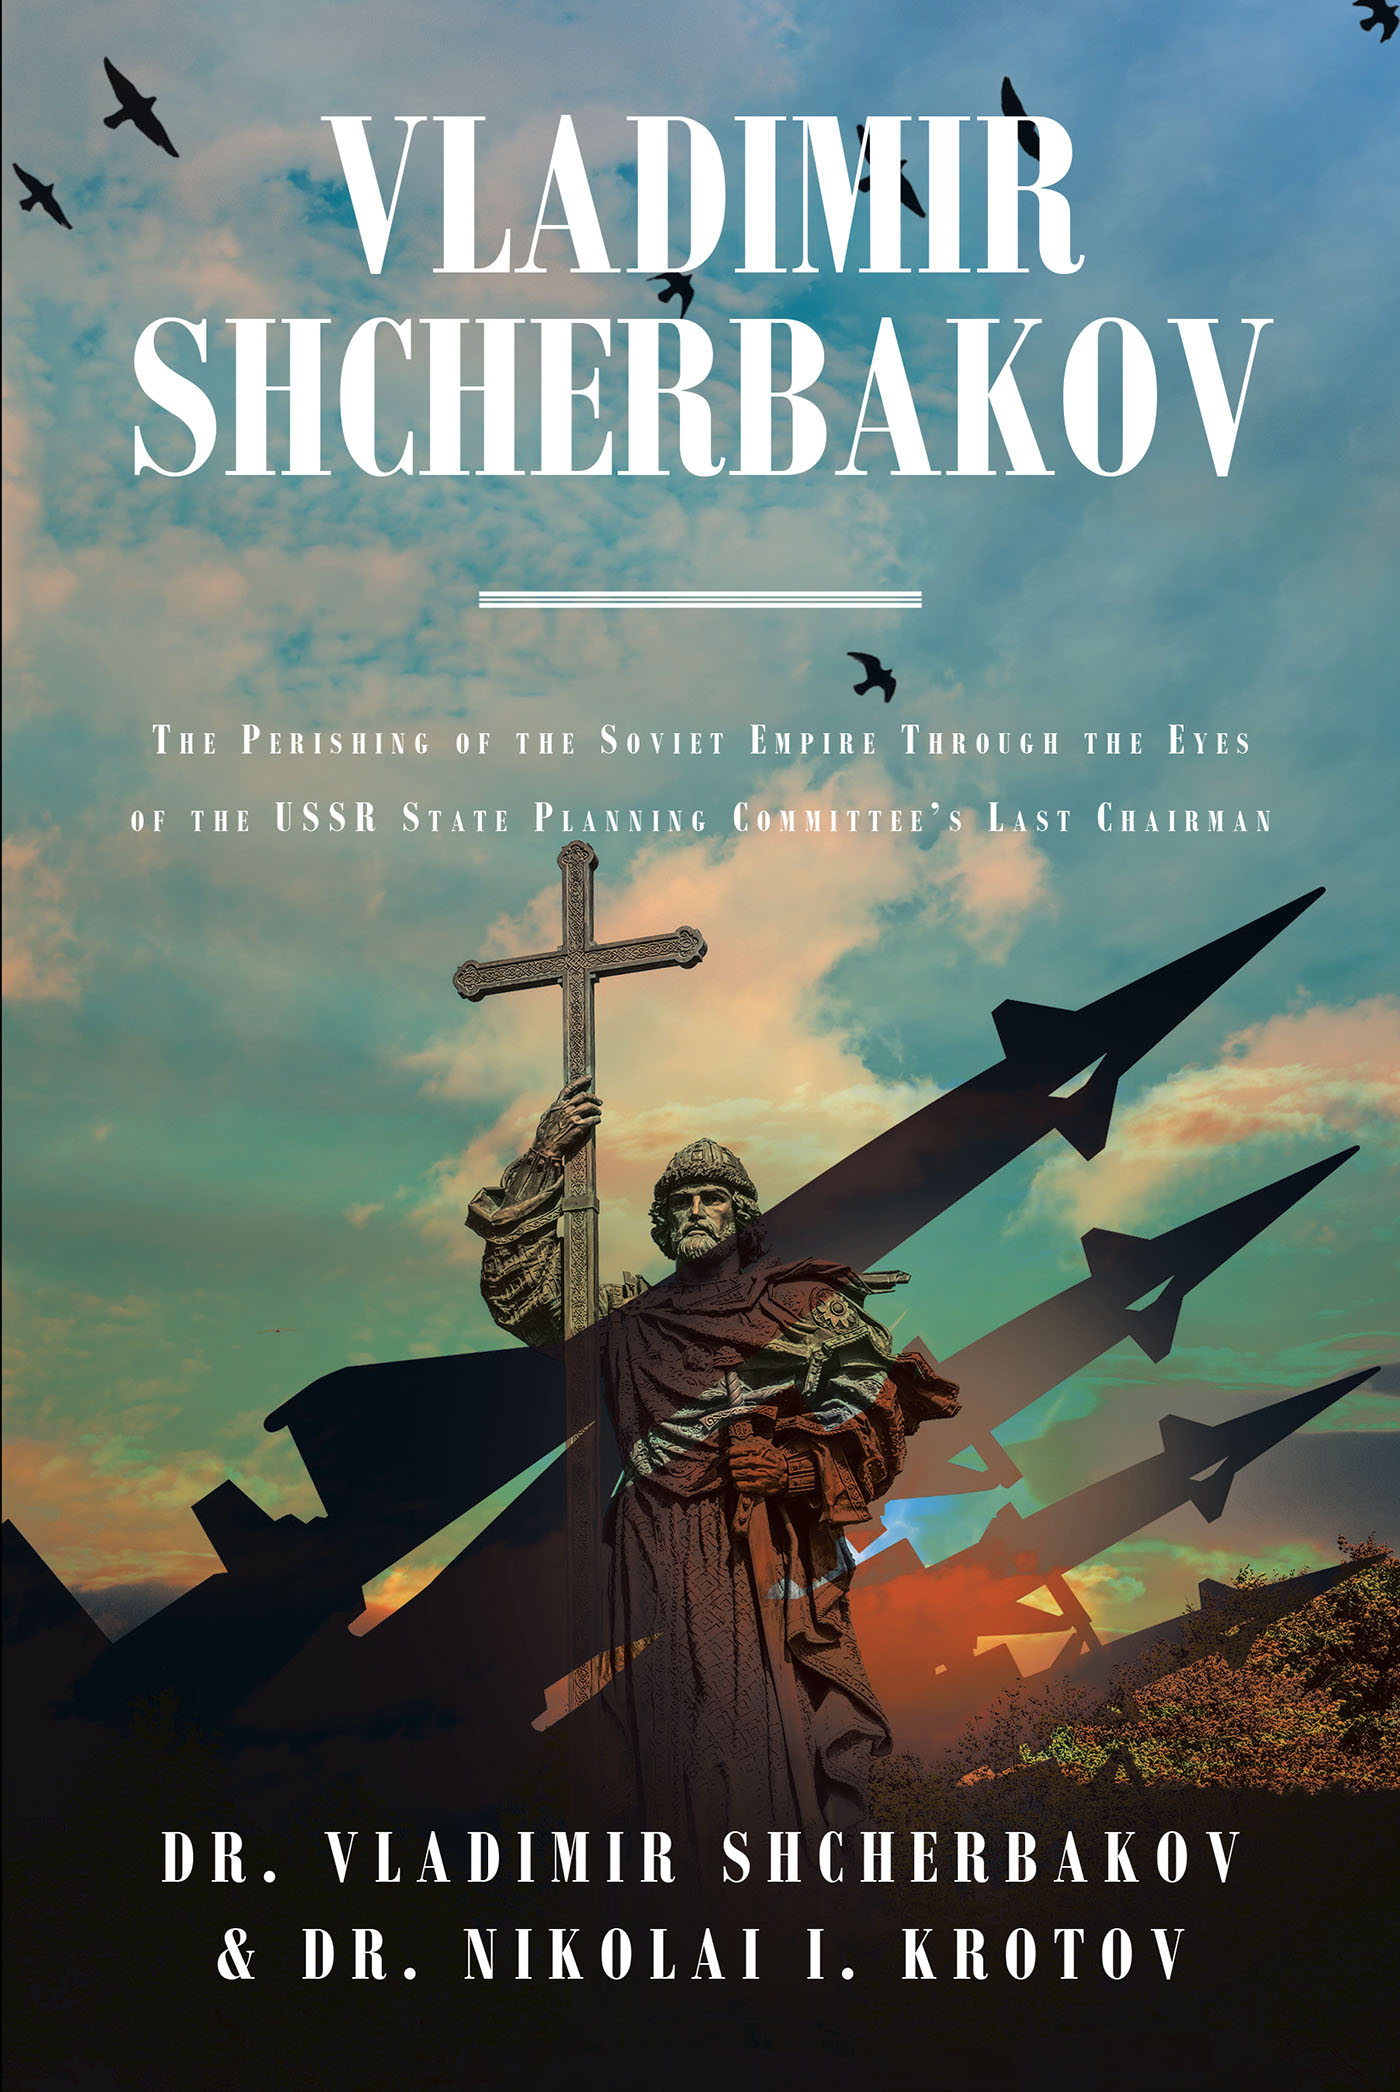 Dr. Vladimir Shcherbakov and Dr. Nikolai I. Krotov’s New Book, “Vladimir Shcherbakov,” is a Fascinating, Behind-the-Scenes Look at the Fall of the Soviet Empire